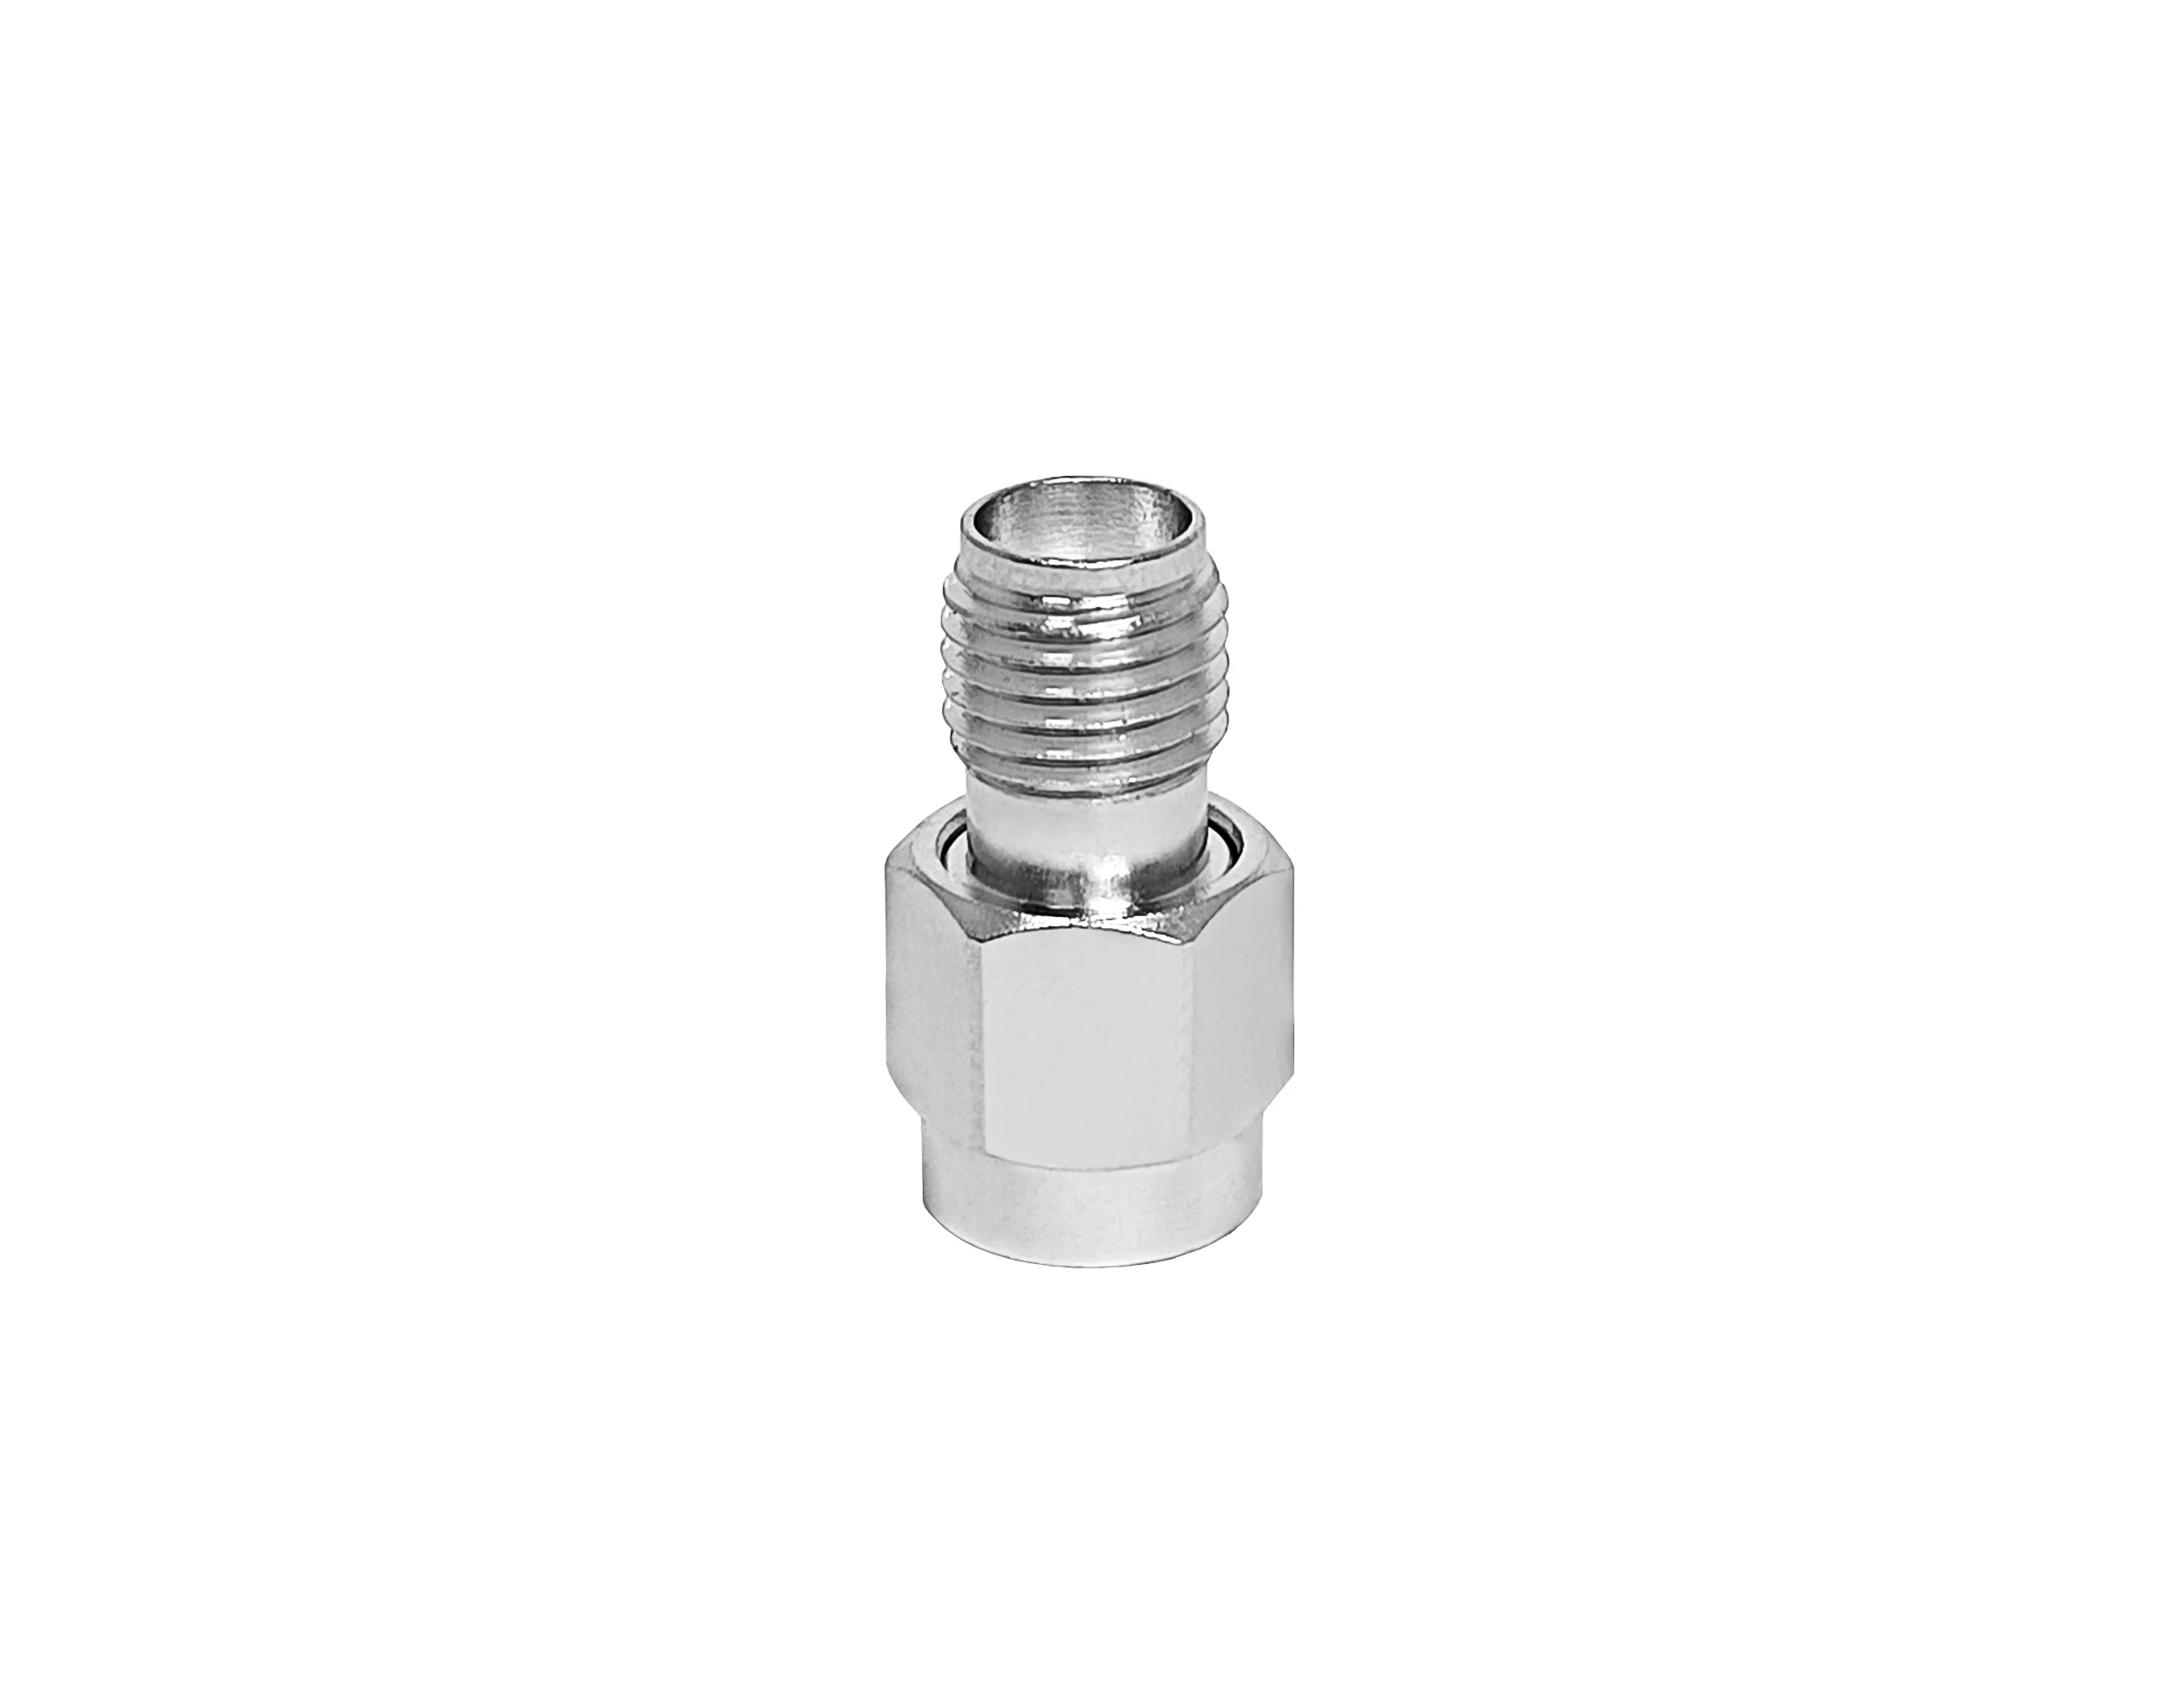 Adapters jack plug  N  sma  Smb  7/16 din  4.310 din male female Kits coaxial adaptor supplier